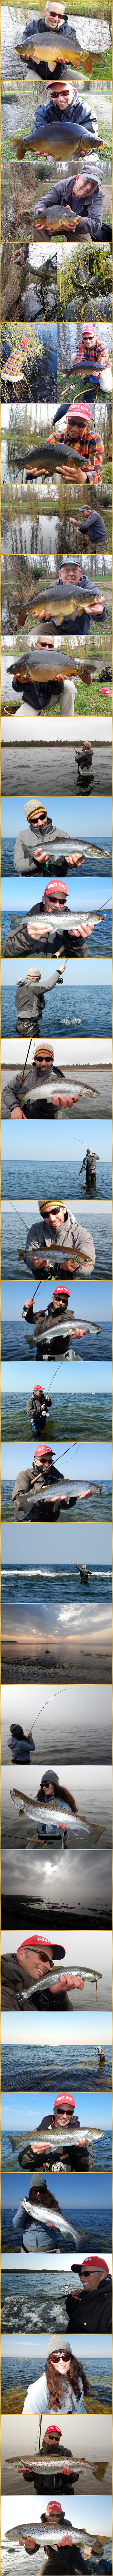 Gotland Sea trout